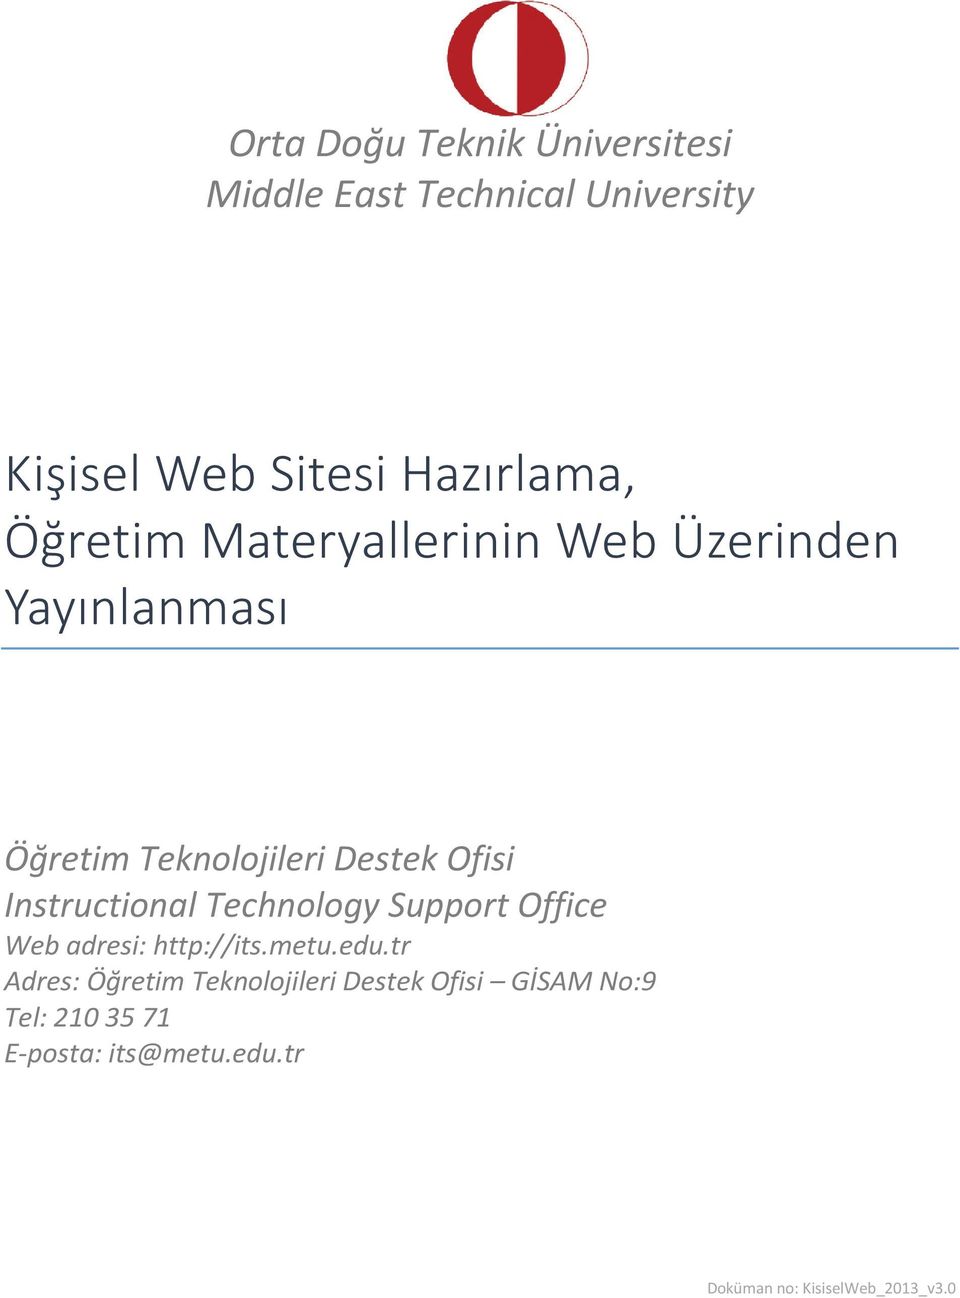 Instructional Technology Support Office Web adresi: http://its.metu.edu.